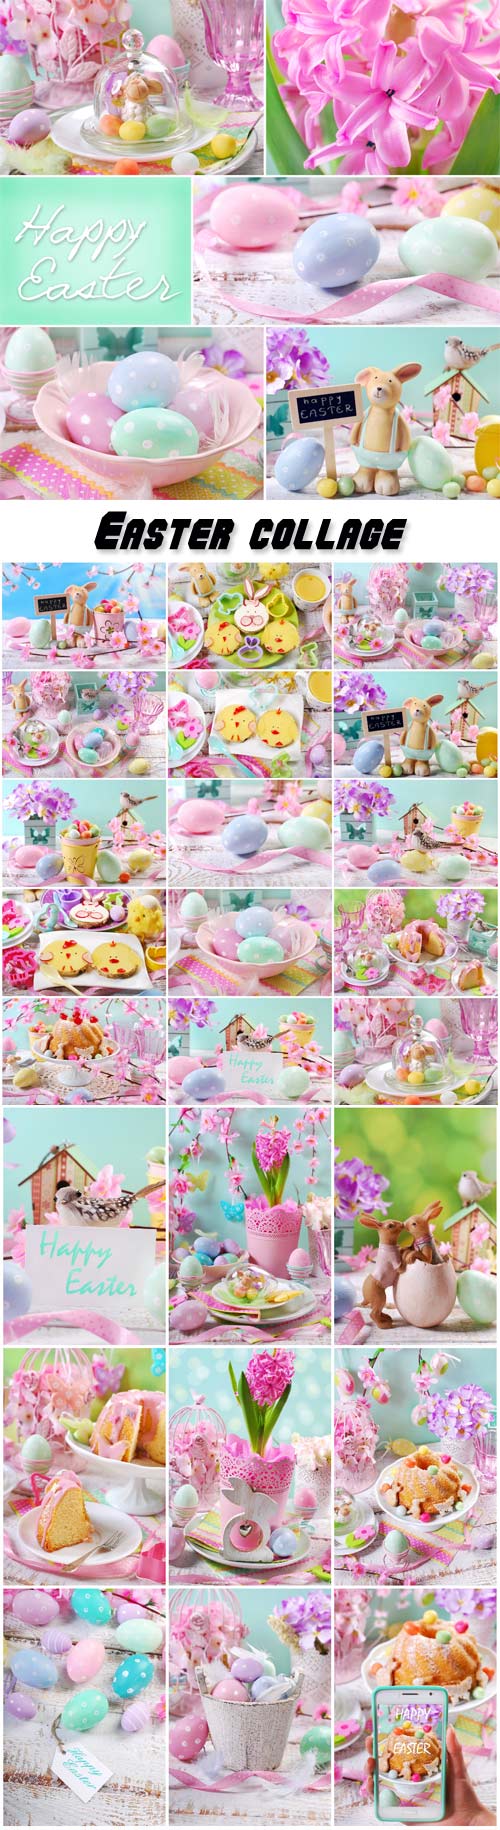 Easter collage, easter cake, easter eggs